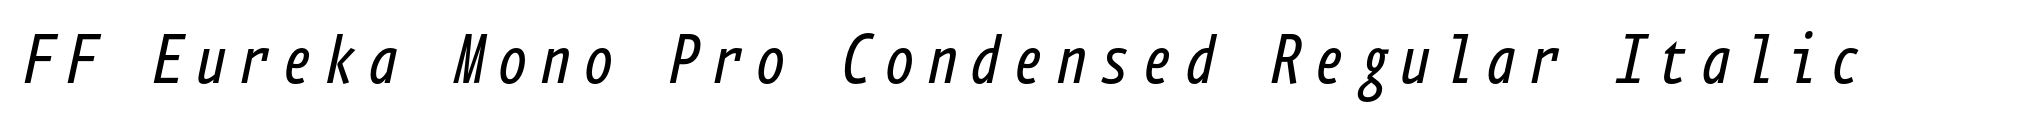 FF Eureka Mono Pro Condensed Regular Italic image